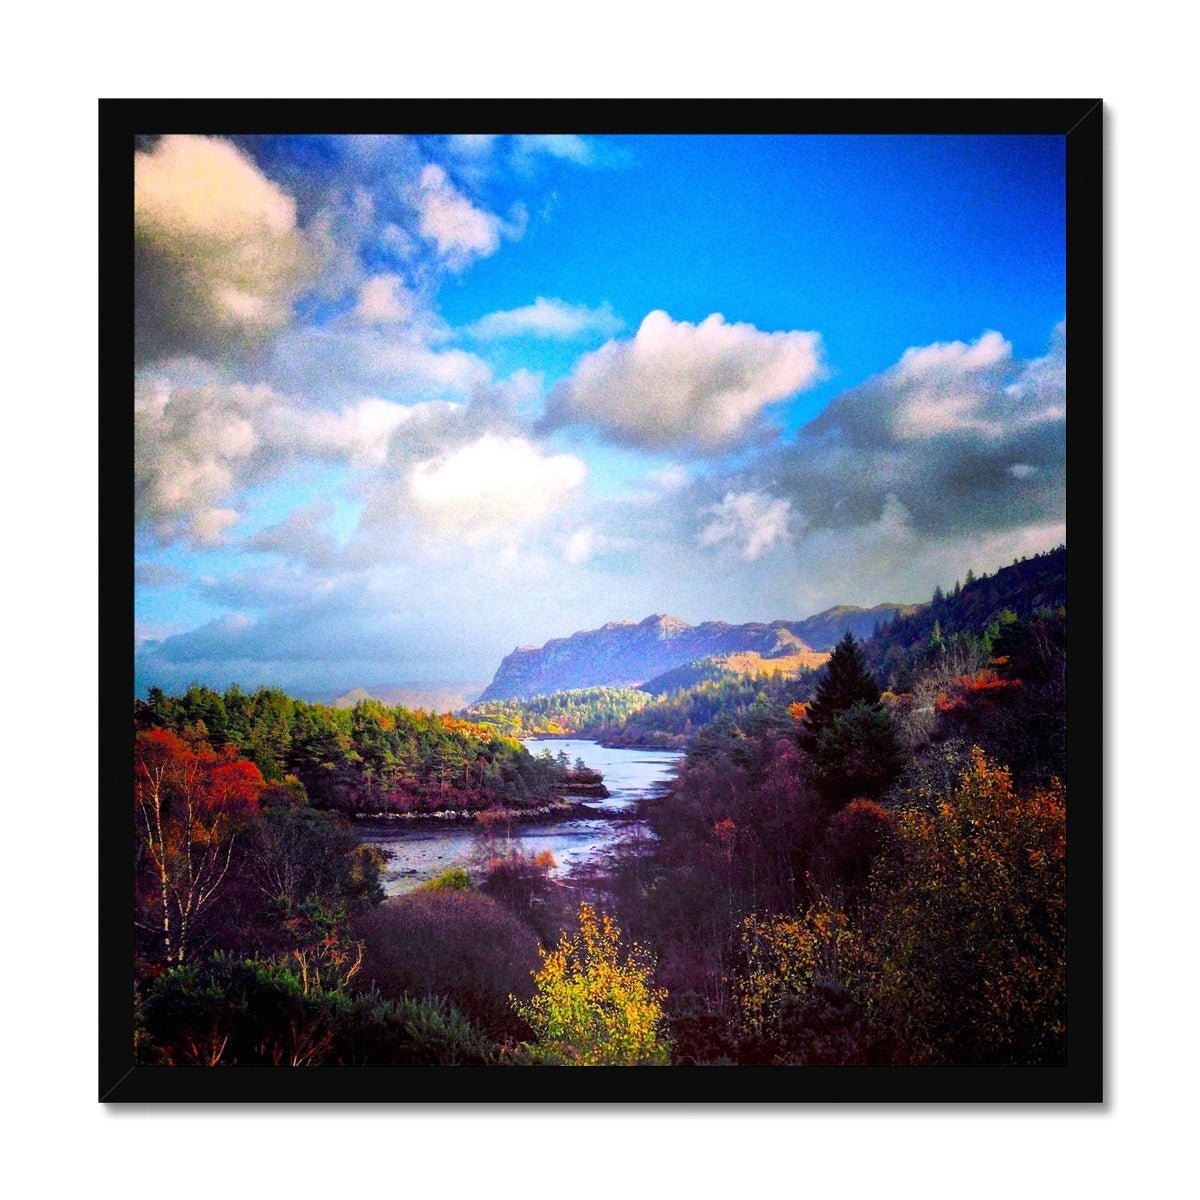 Plockton Scottish Highlands Painting | Framed Prints From Scotland-Framed Prints-Scottish Highlands & Lowlands Art Gallery-20"x20"-Black Frame-Paintings, Prints, Homeware, Art Gifts From Scotland By Scottish Artist Kevin Hunter